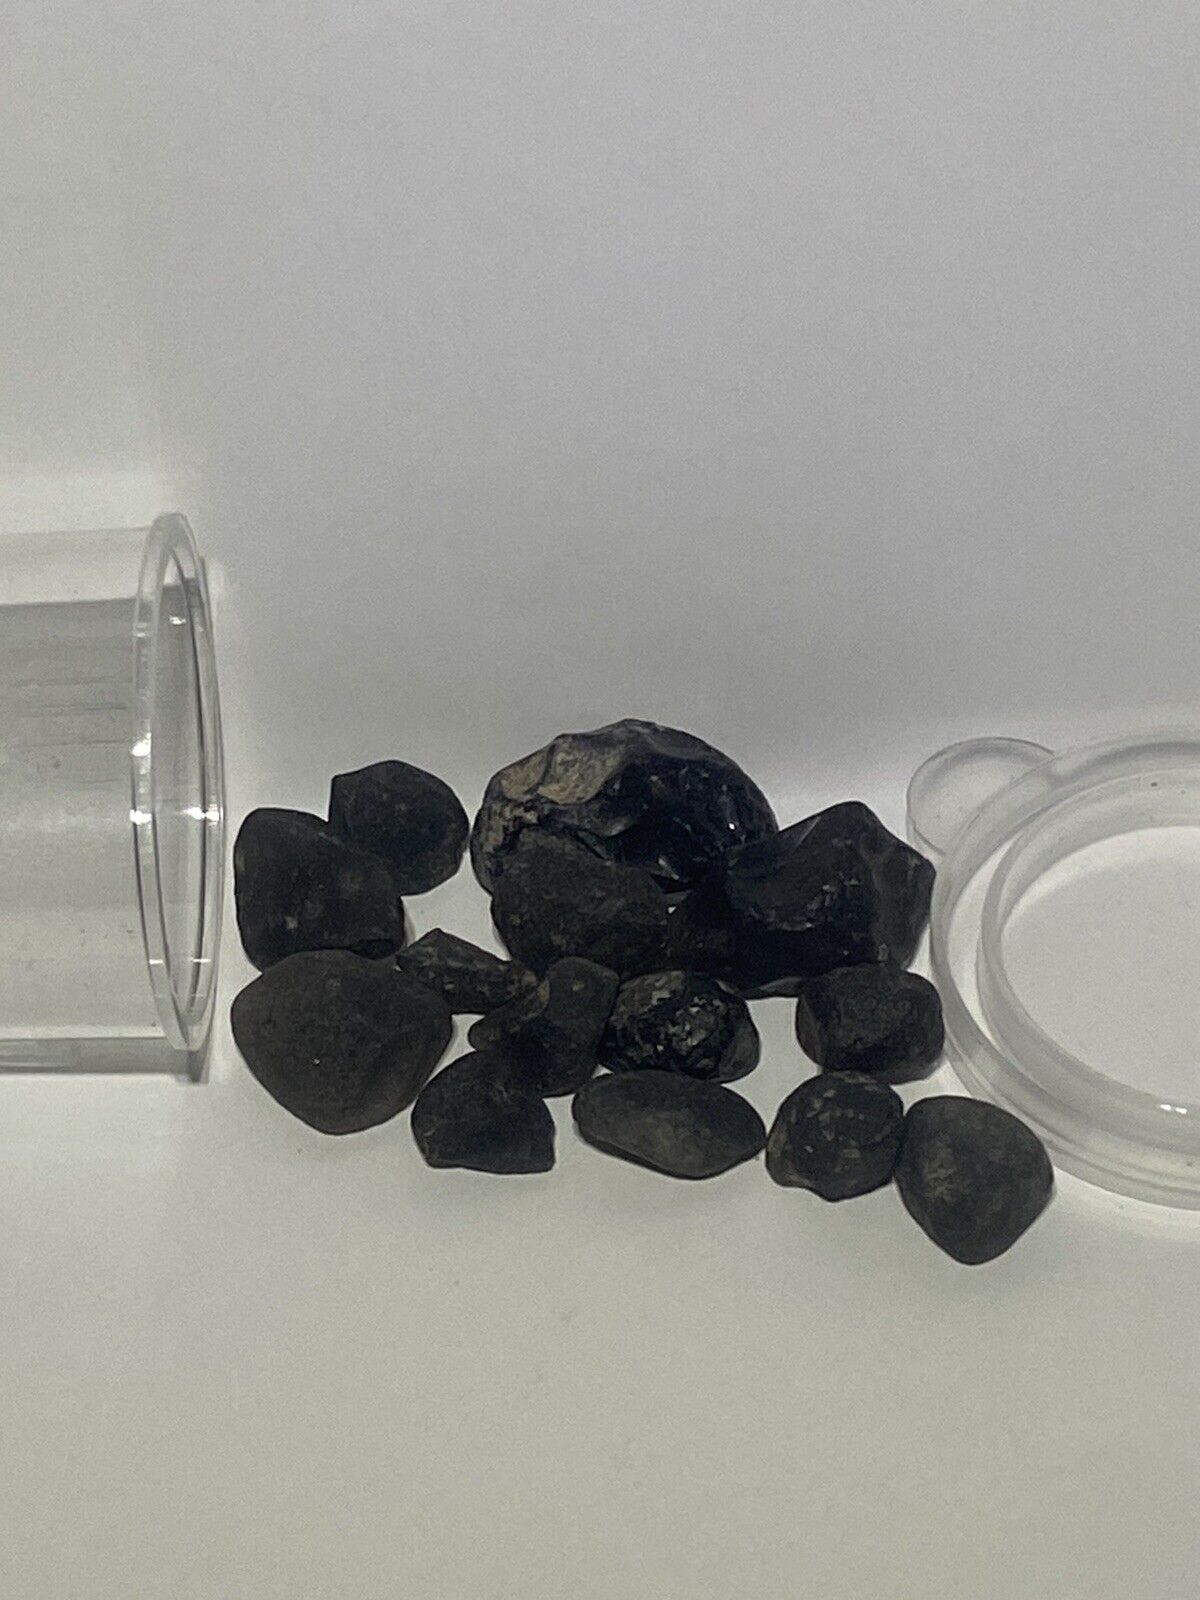 Saffordites Smalls Each Container 7-8g Cintamani Stones  Minerals  Arizona